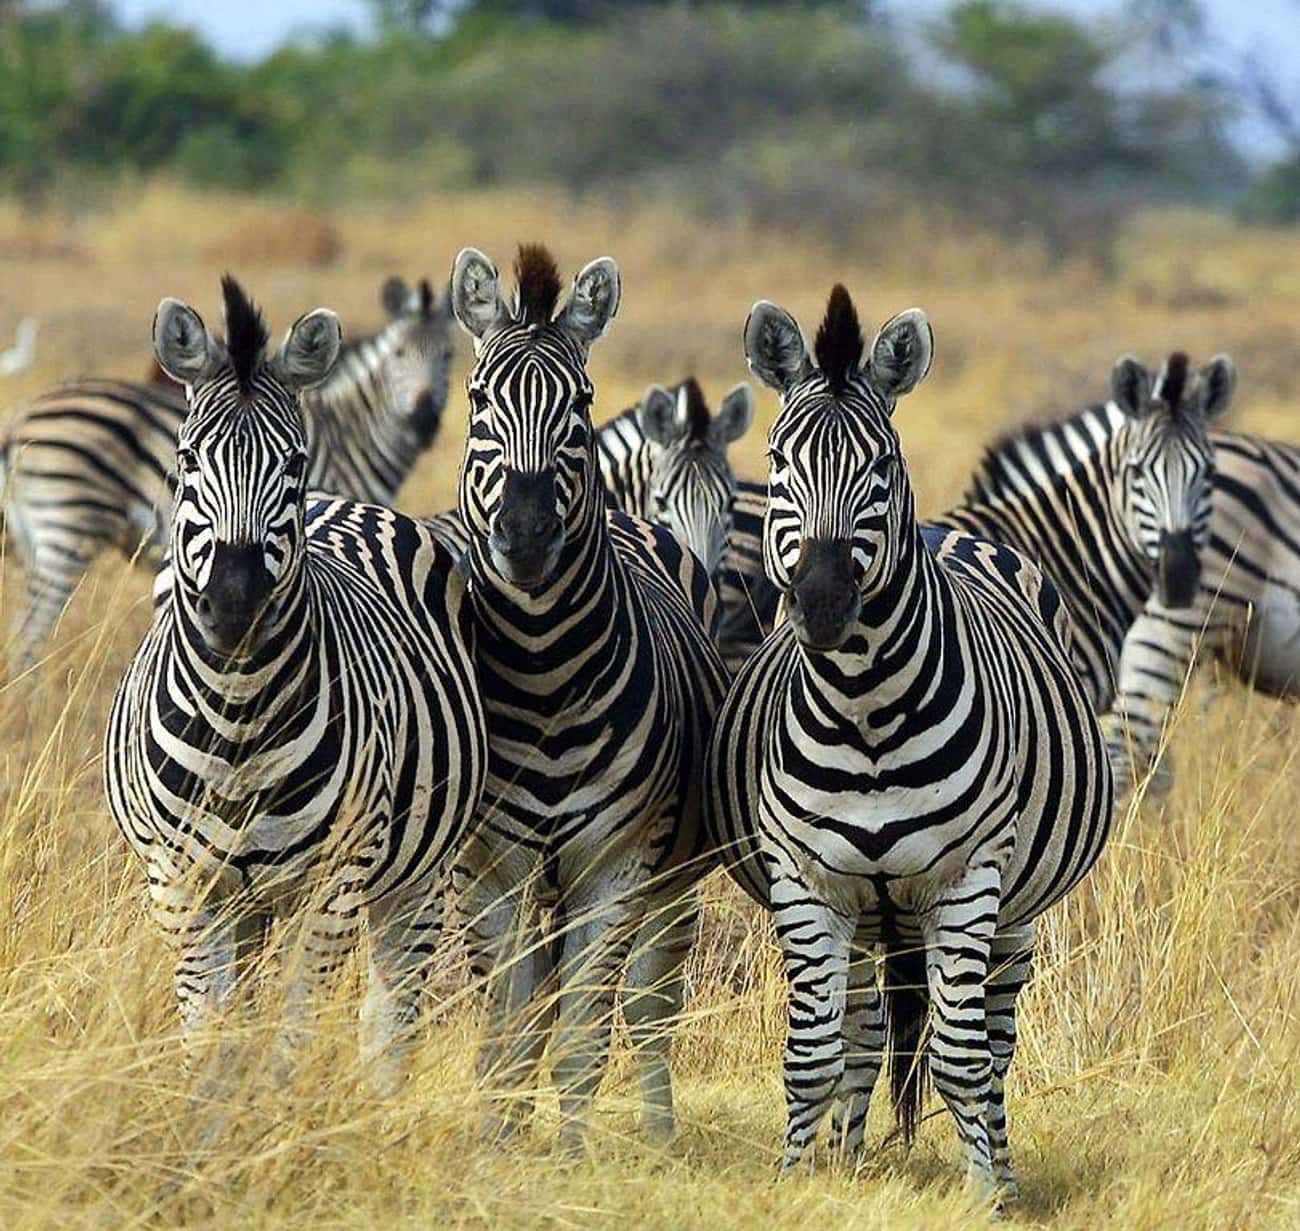 Zebras Can't Sleep Alone